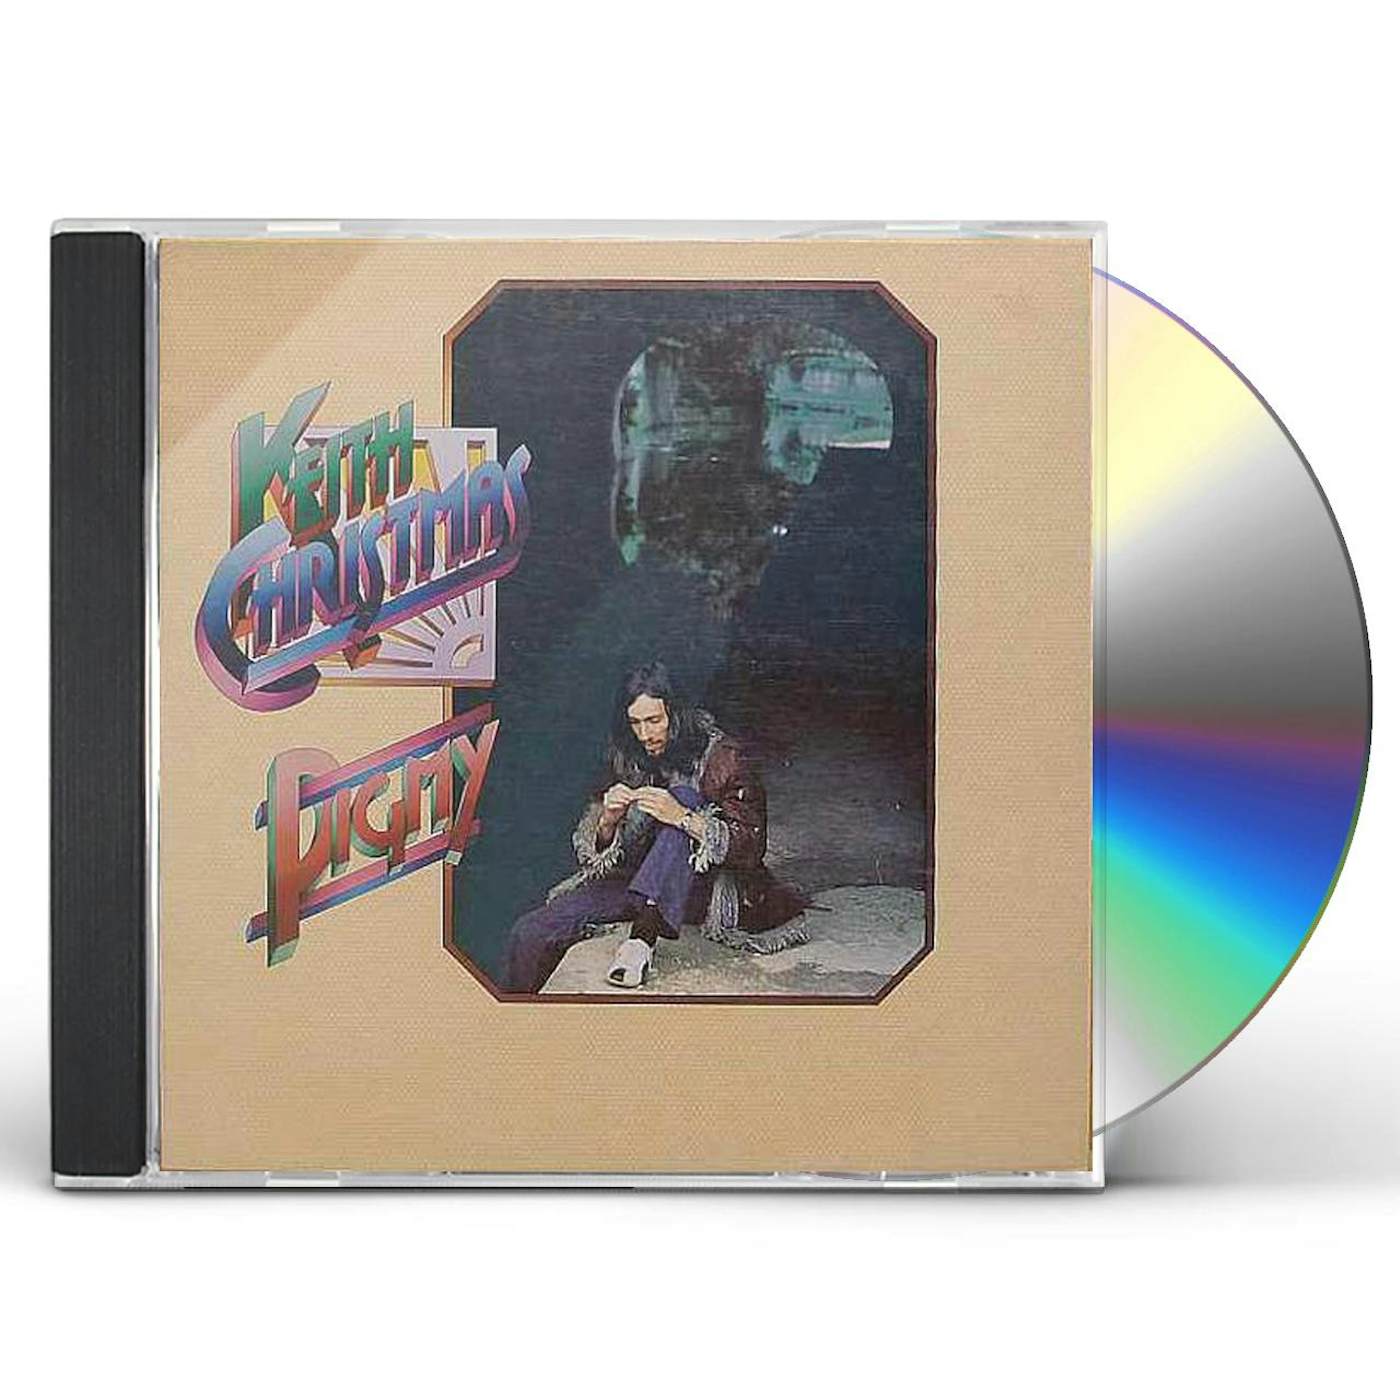 Keith Christmas PIGMY CD